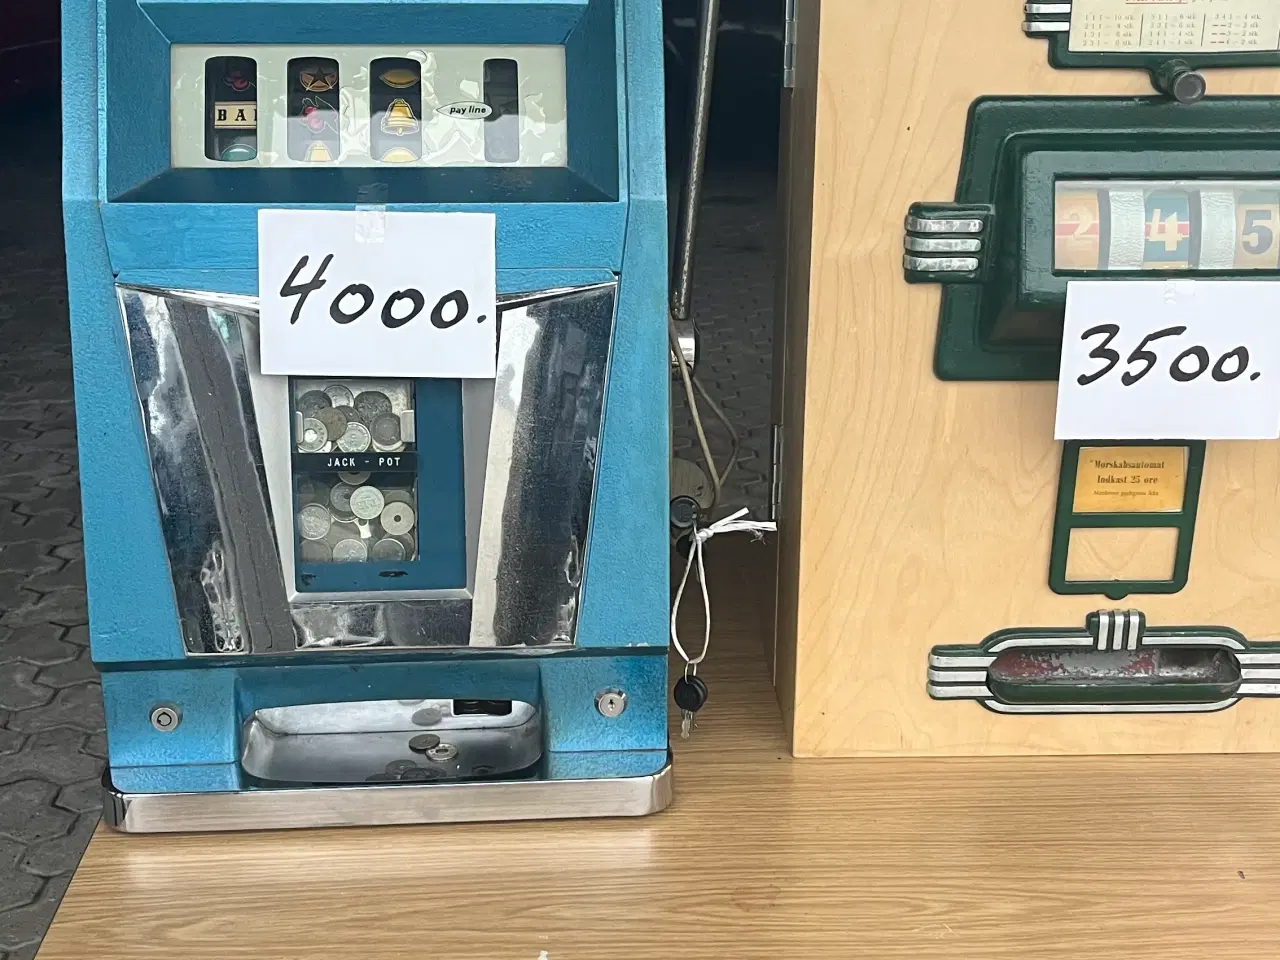 Billede 2 - Hobby og sjovt spilleautomat osv